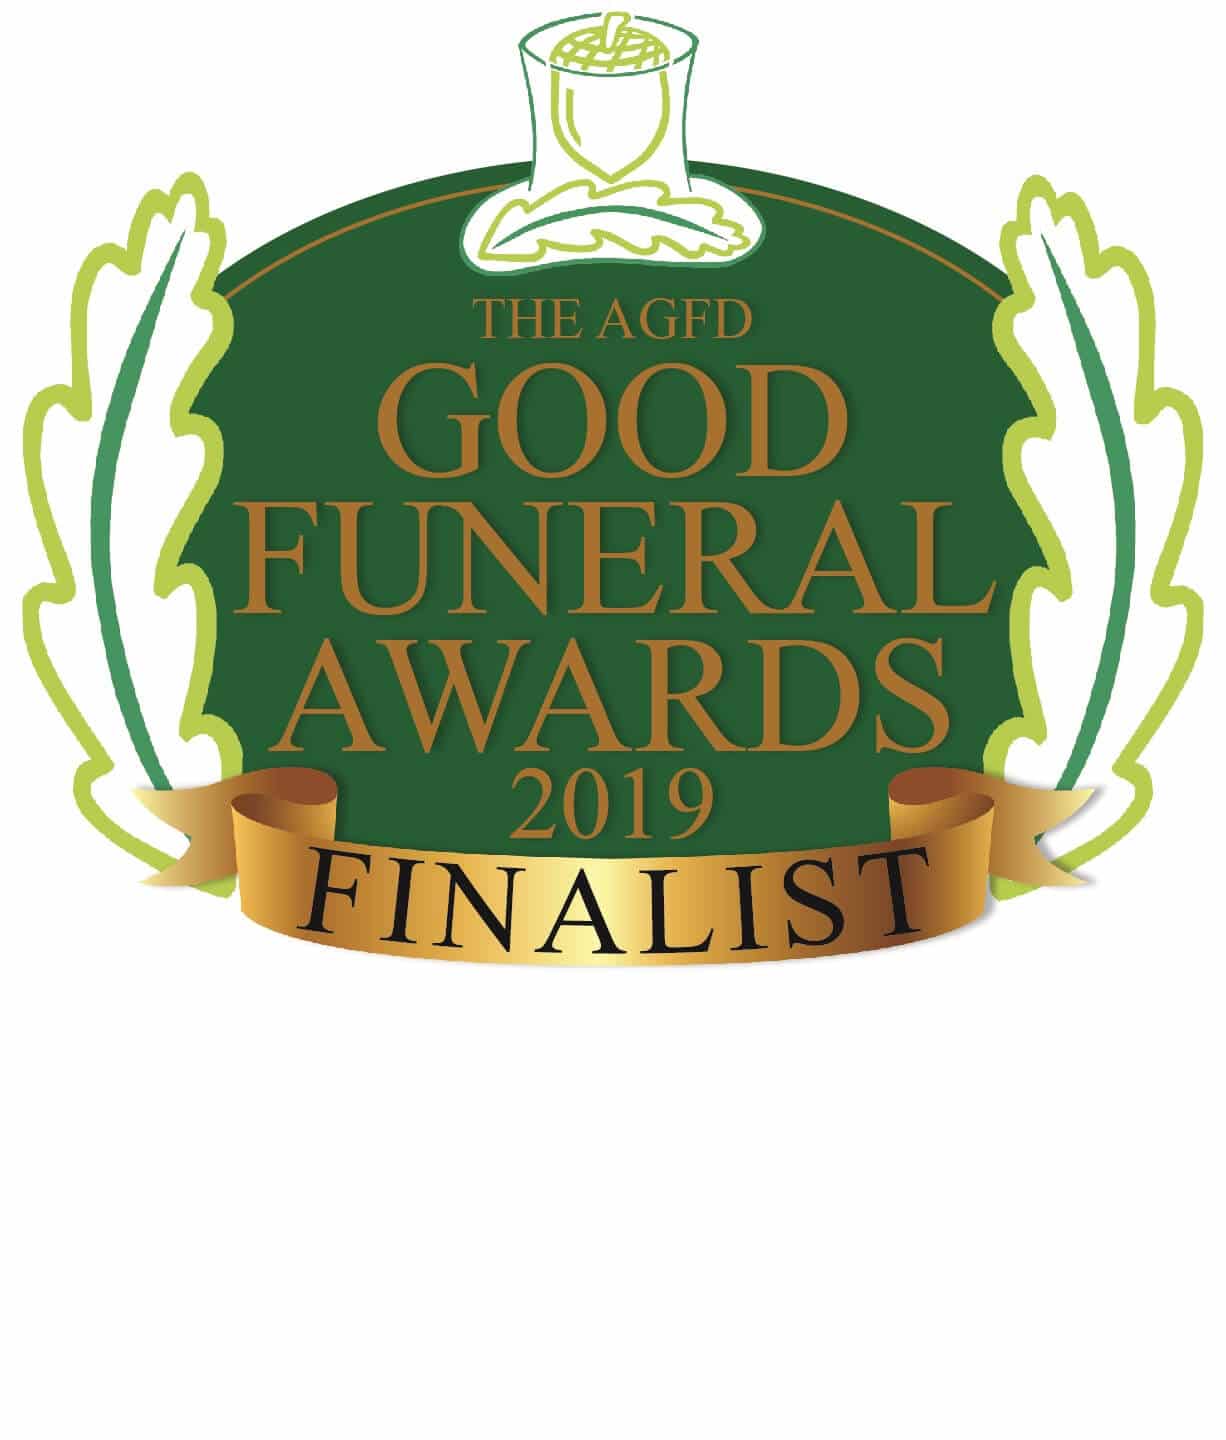 Good funeral awards finalist